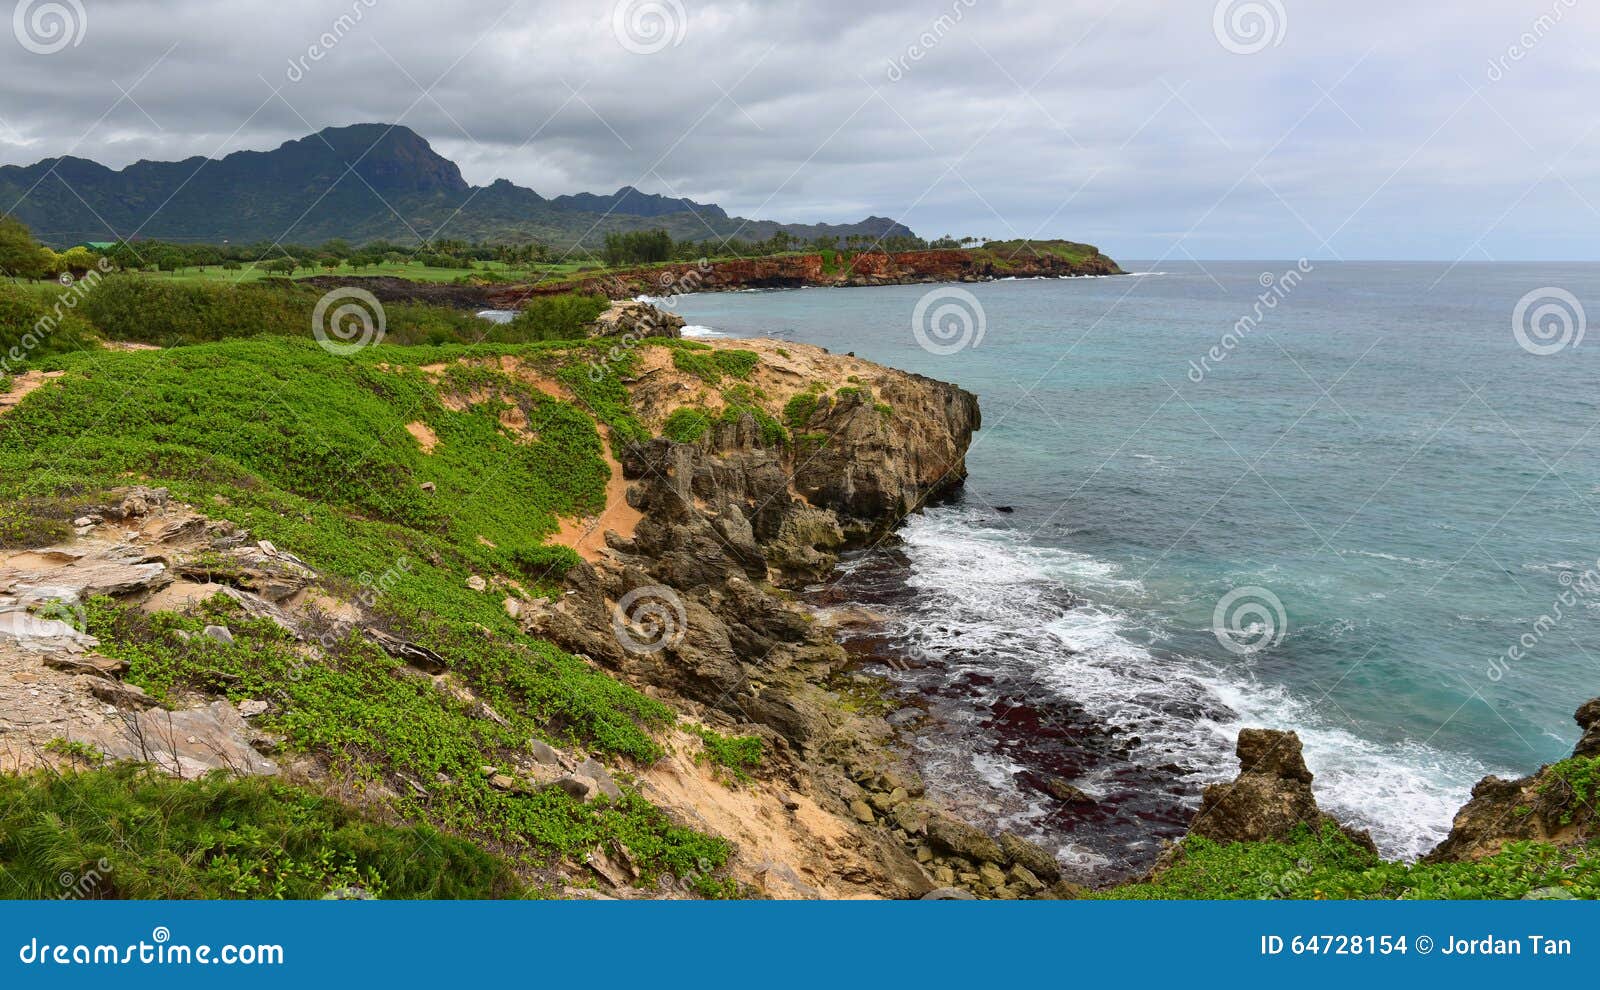 beautiful coastline along mahaulepu heritage trail in kauai island